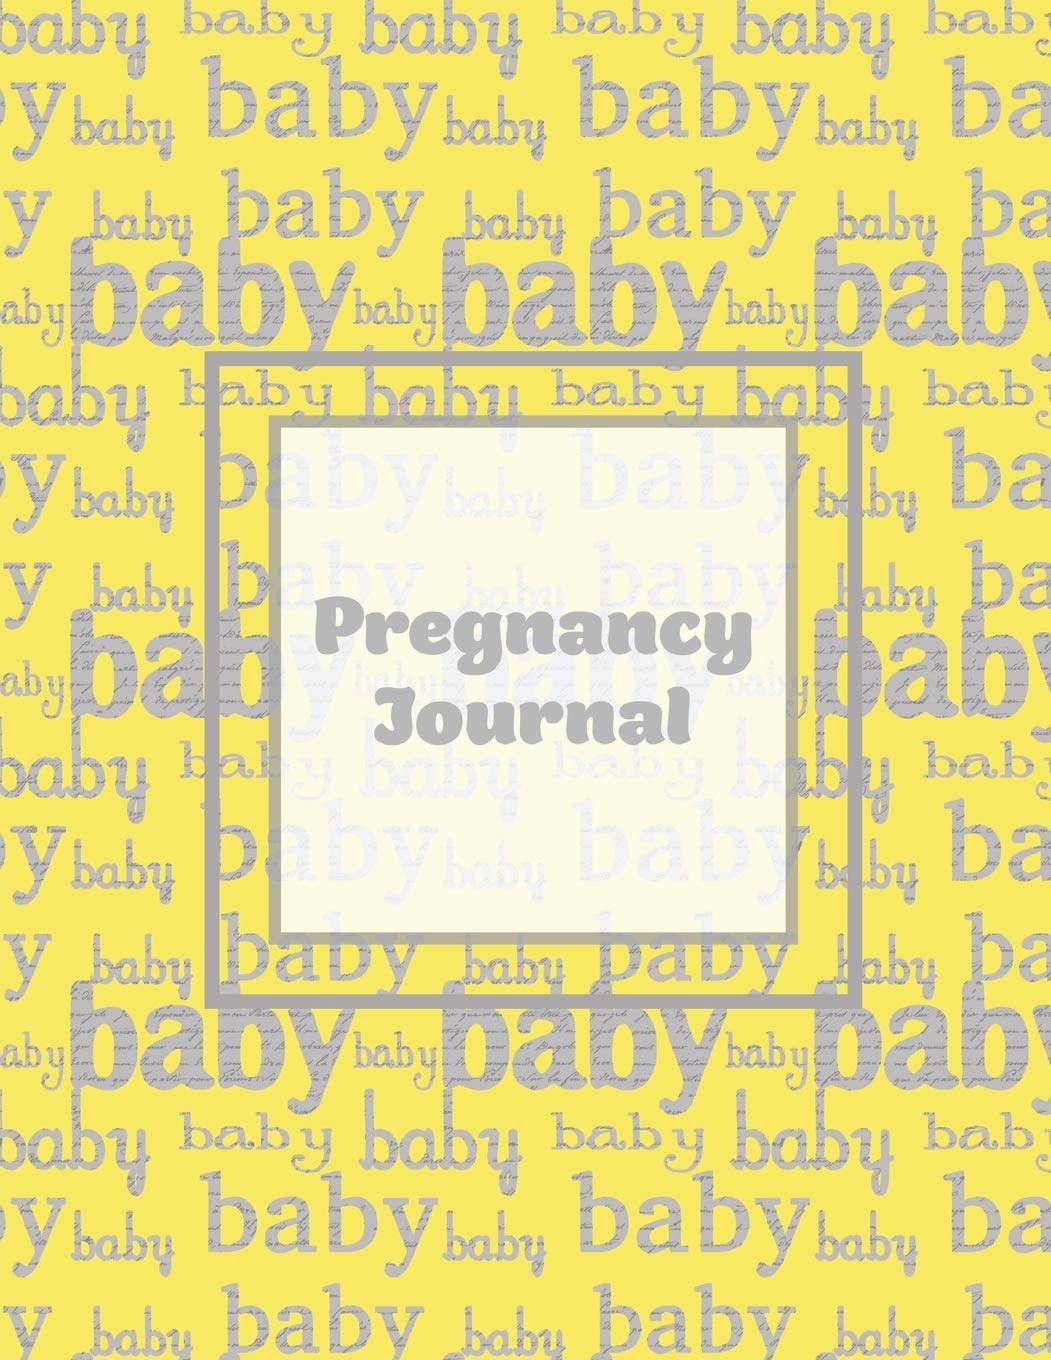 PREGNANCY JOURNAL